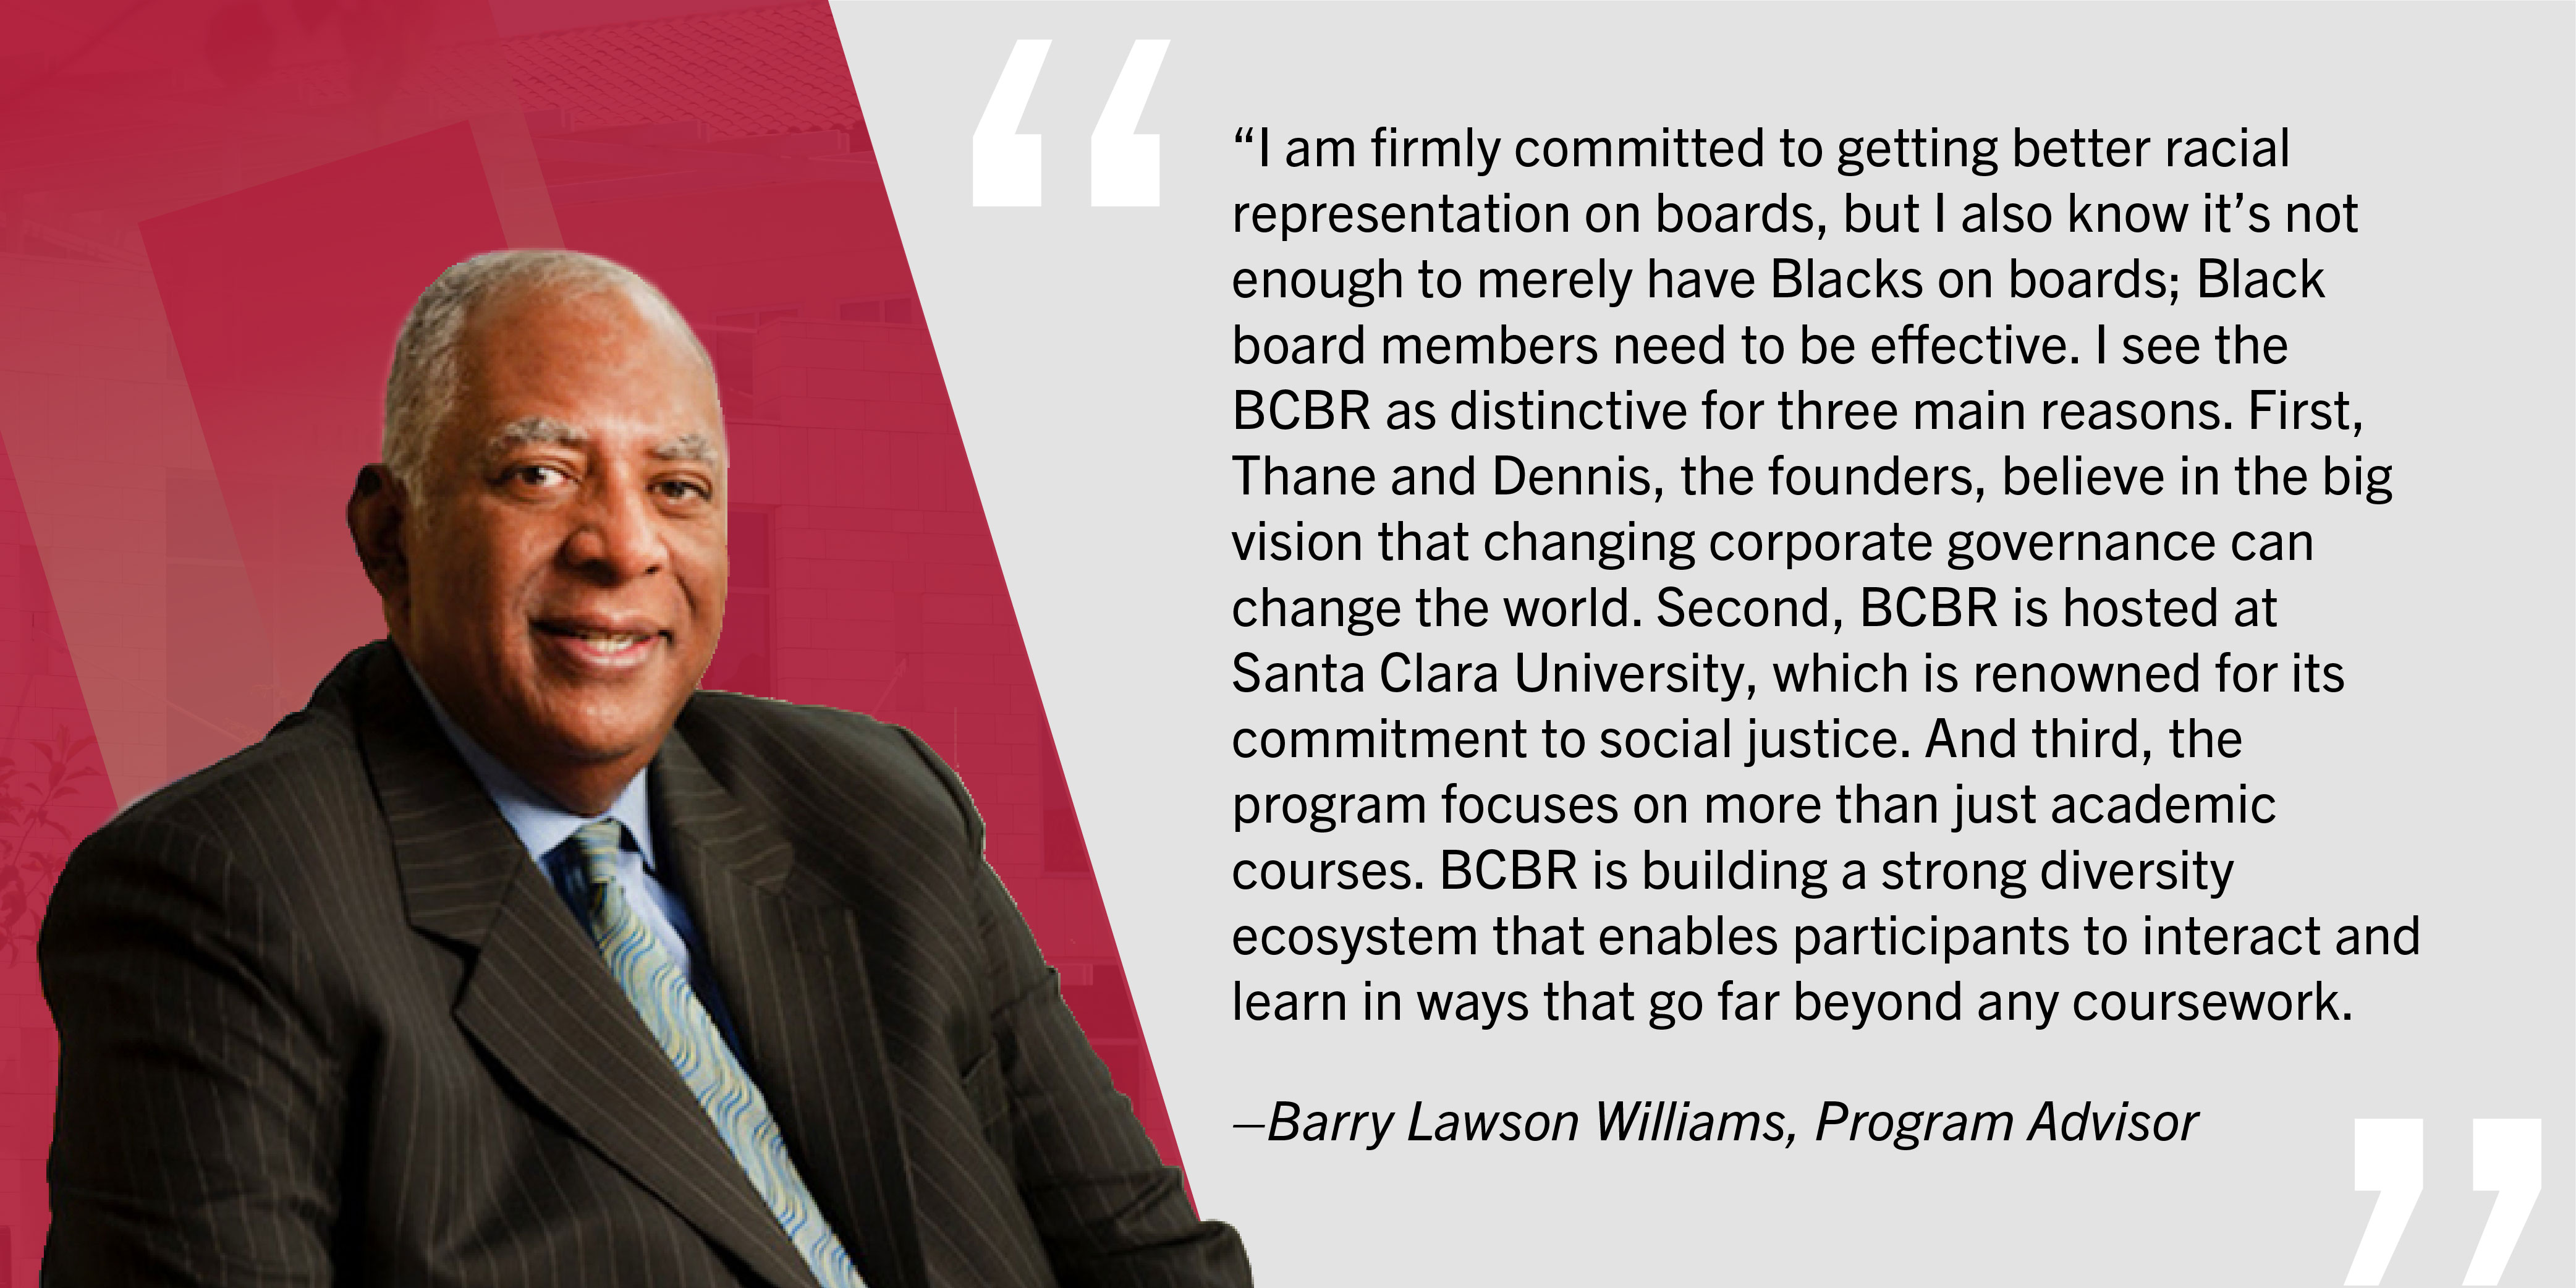 Testimonial by Barry Lawson Williams, Program Advisor